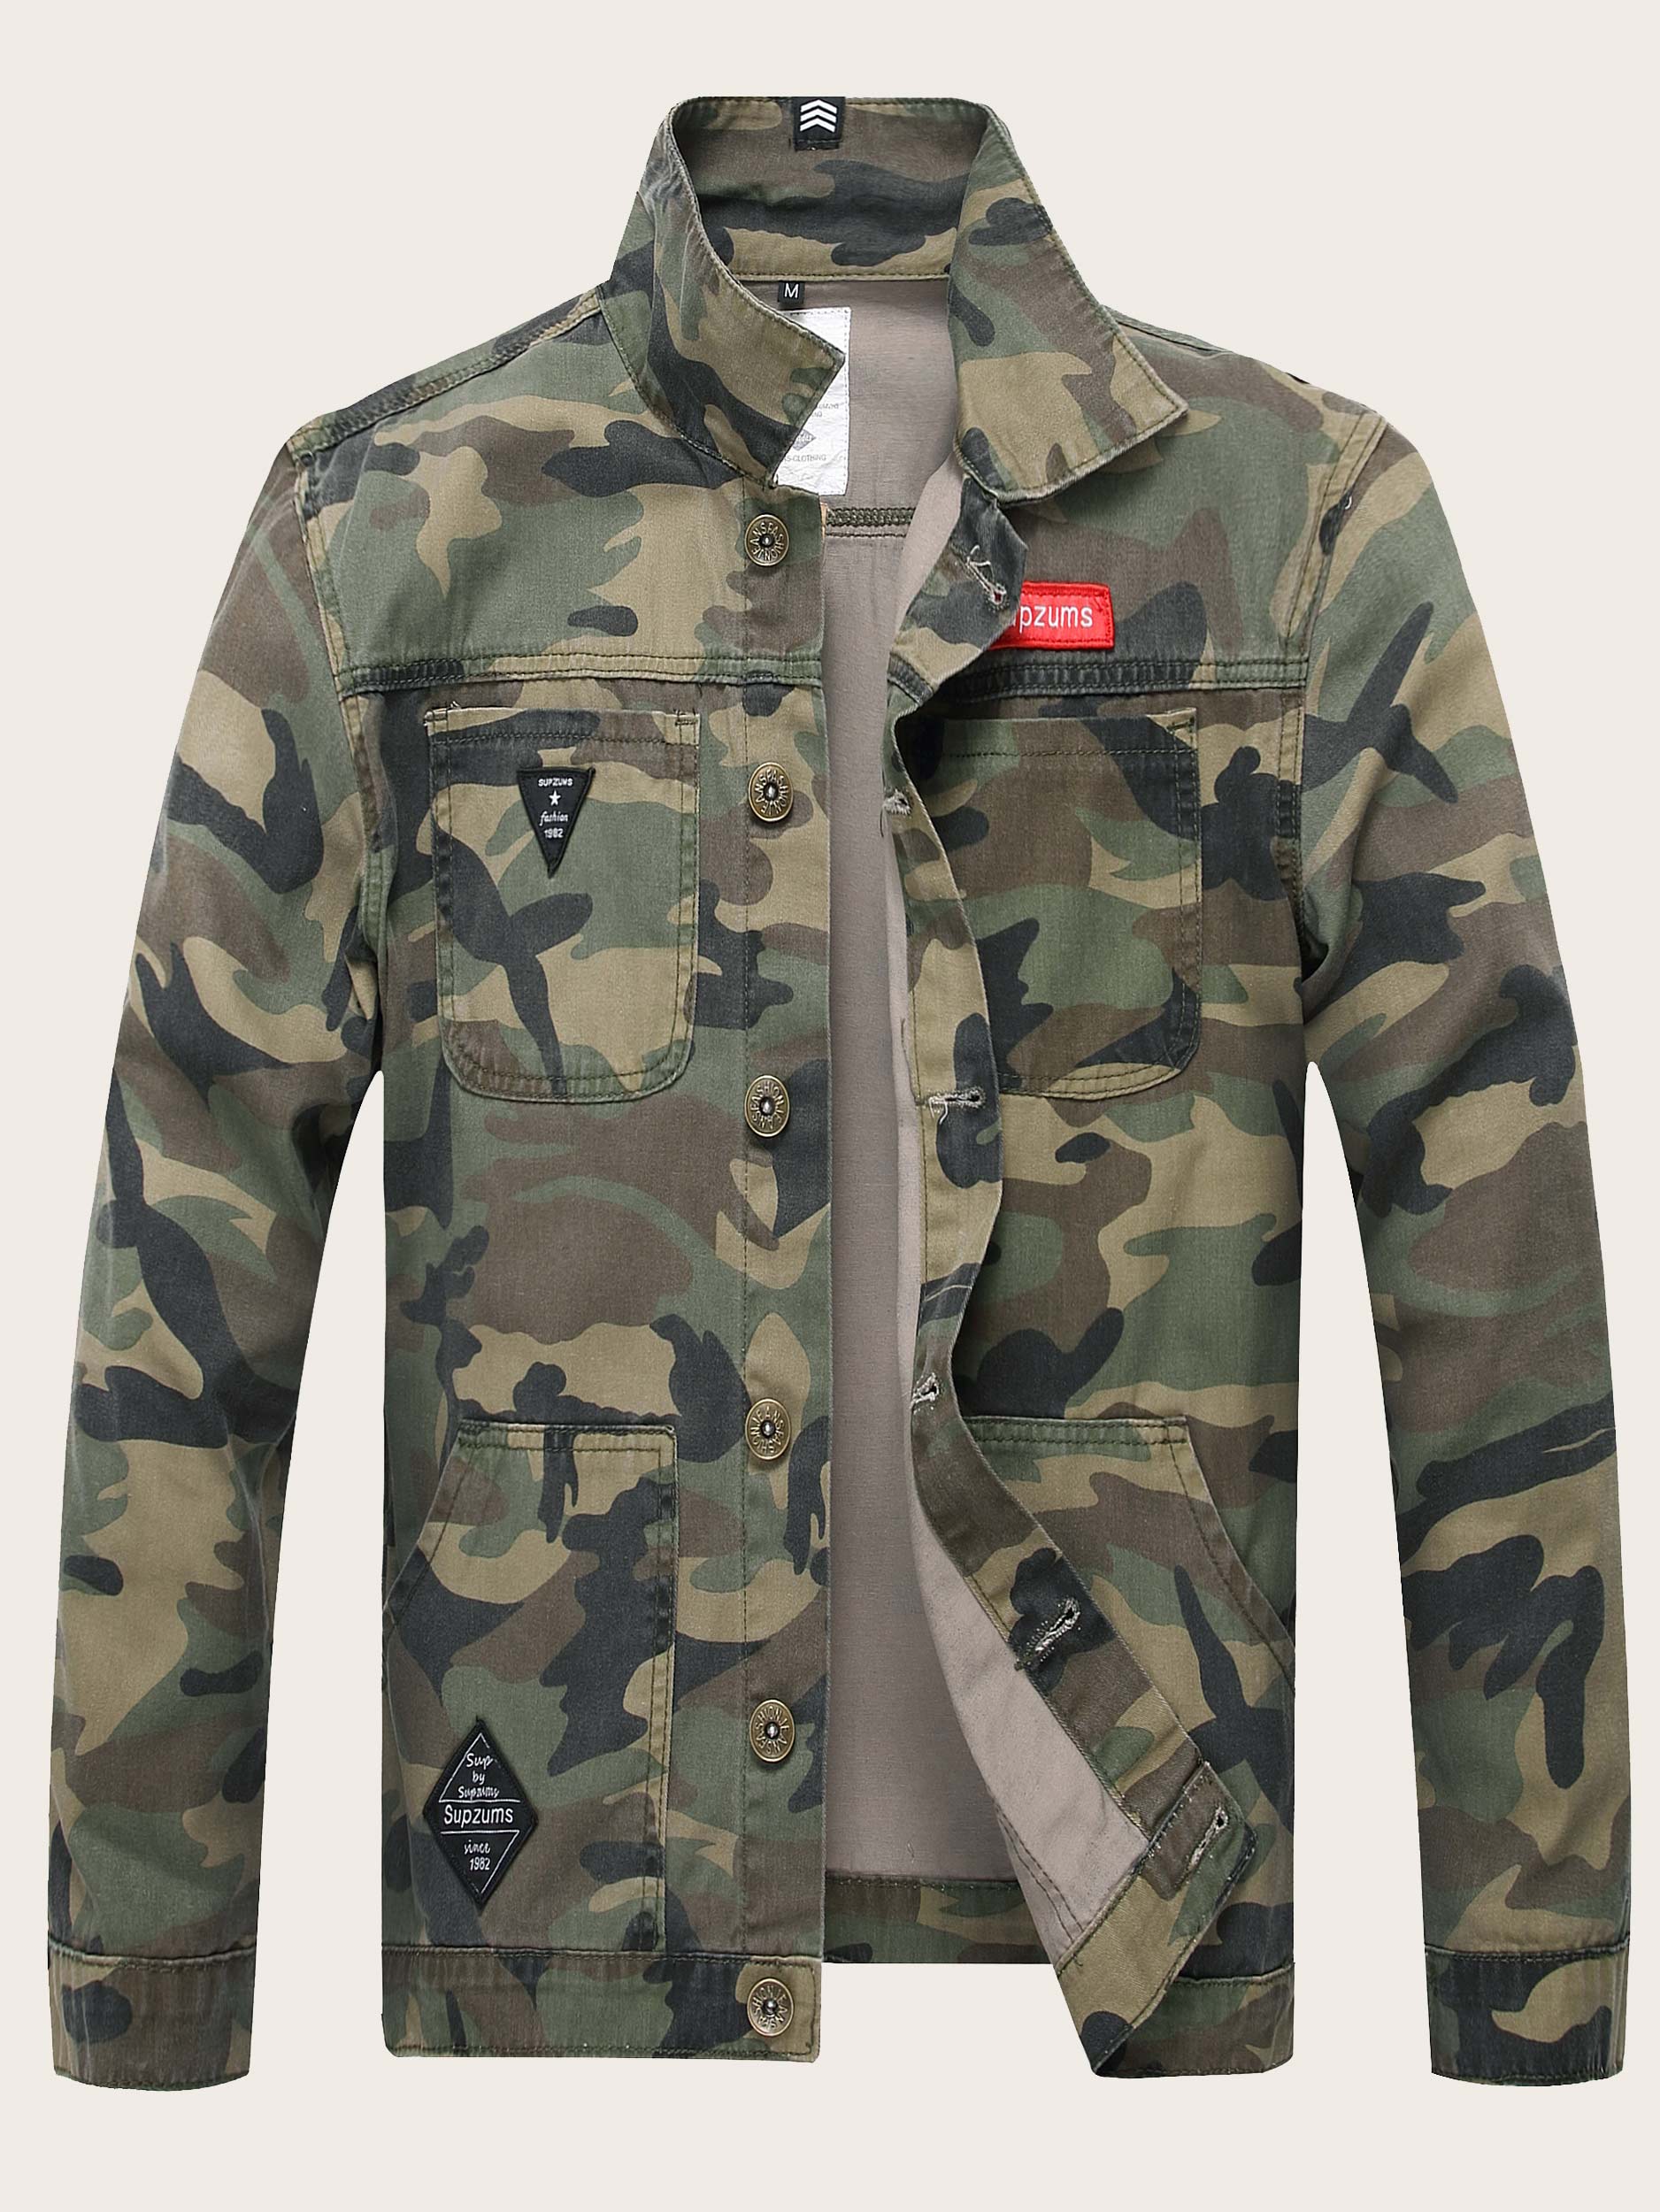 Buy BaronHong Men's Slim Fit Military US Army Camouflage Denim  Jacket(armygreen,4XL) at Amazon.in